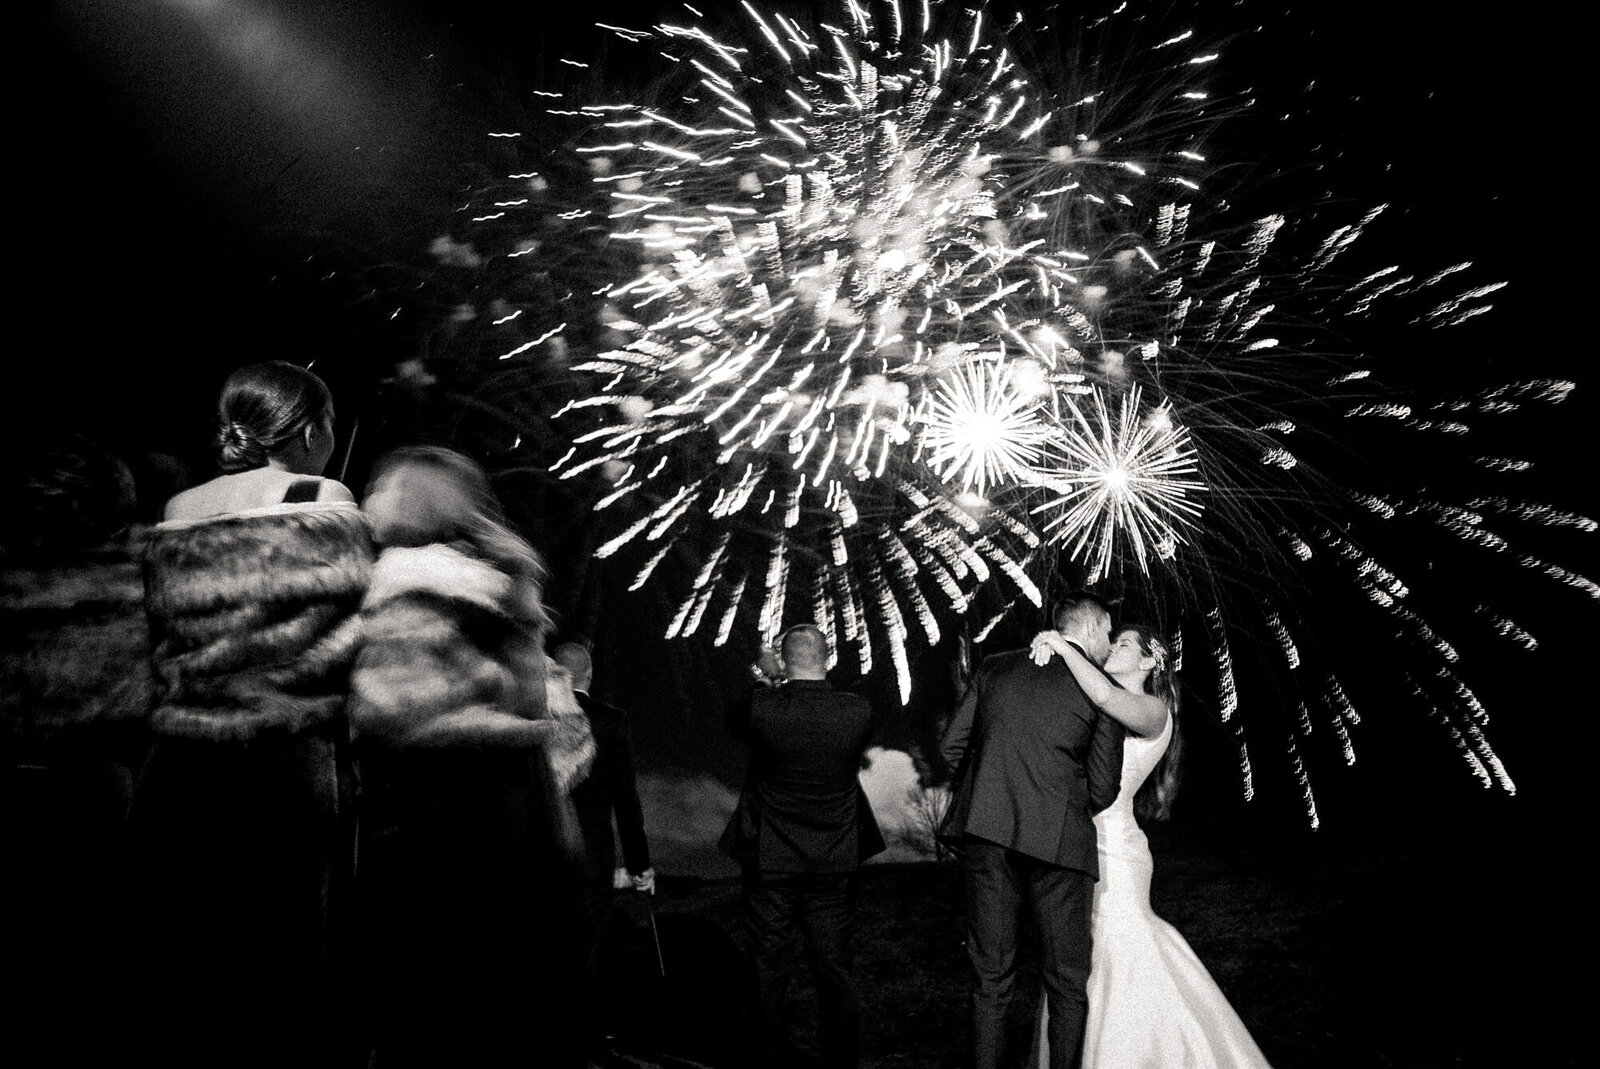 079-sean-cook-wedding-photography-fireworks-couple-kiss